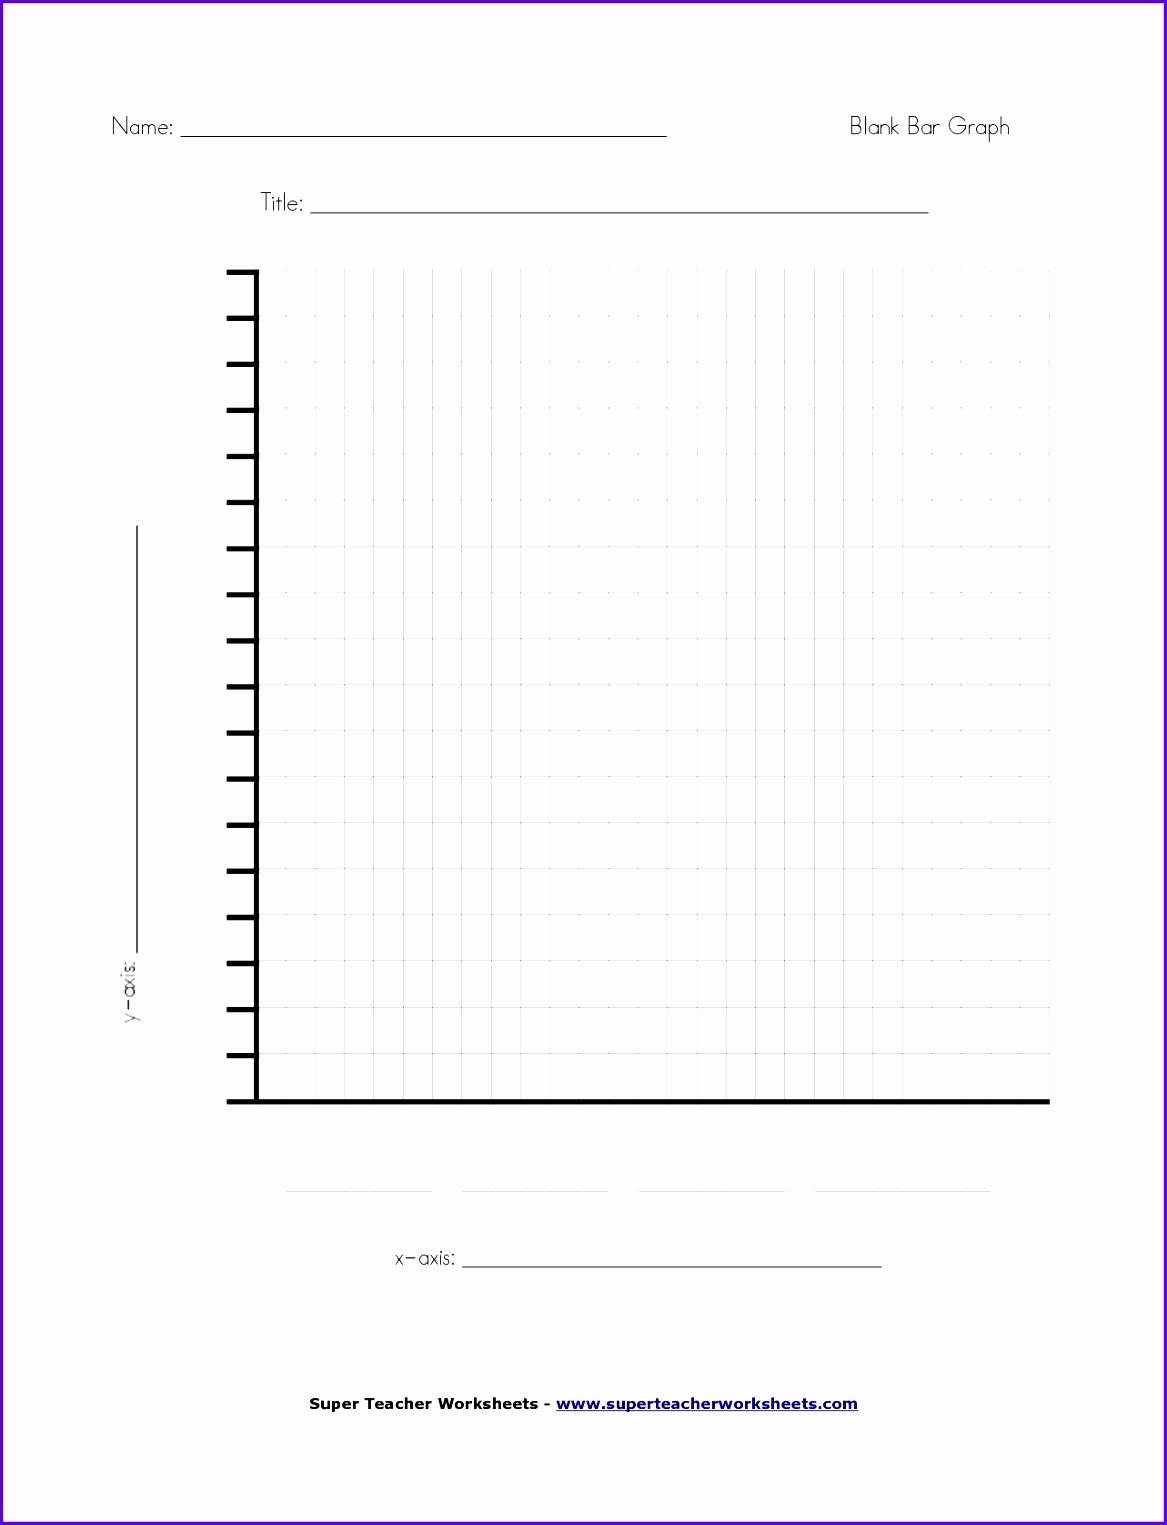 Excel Bar Graph Template Elegant 7 Excel Bar Graph Templates Exceltemplates Exceltemplates